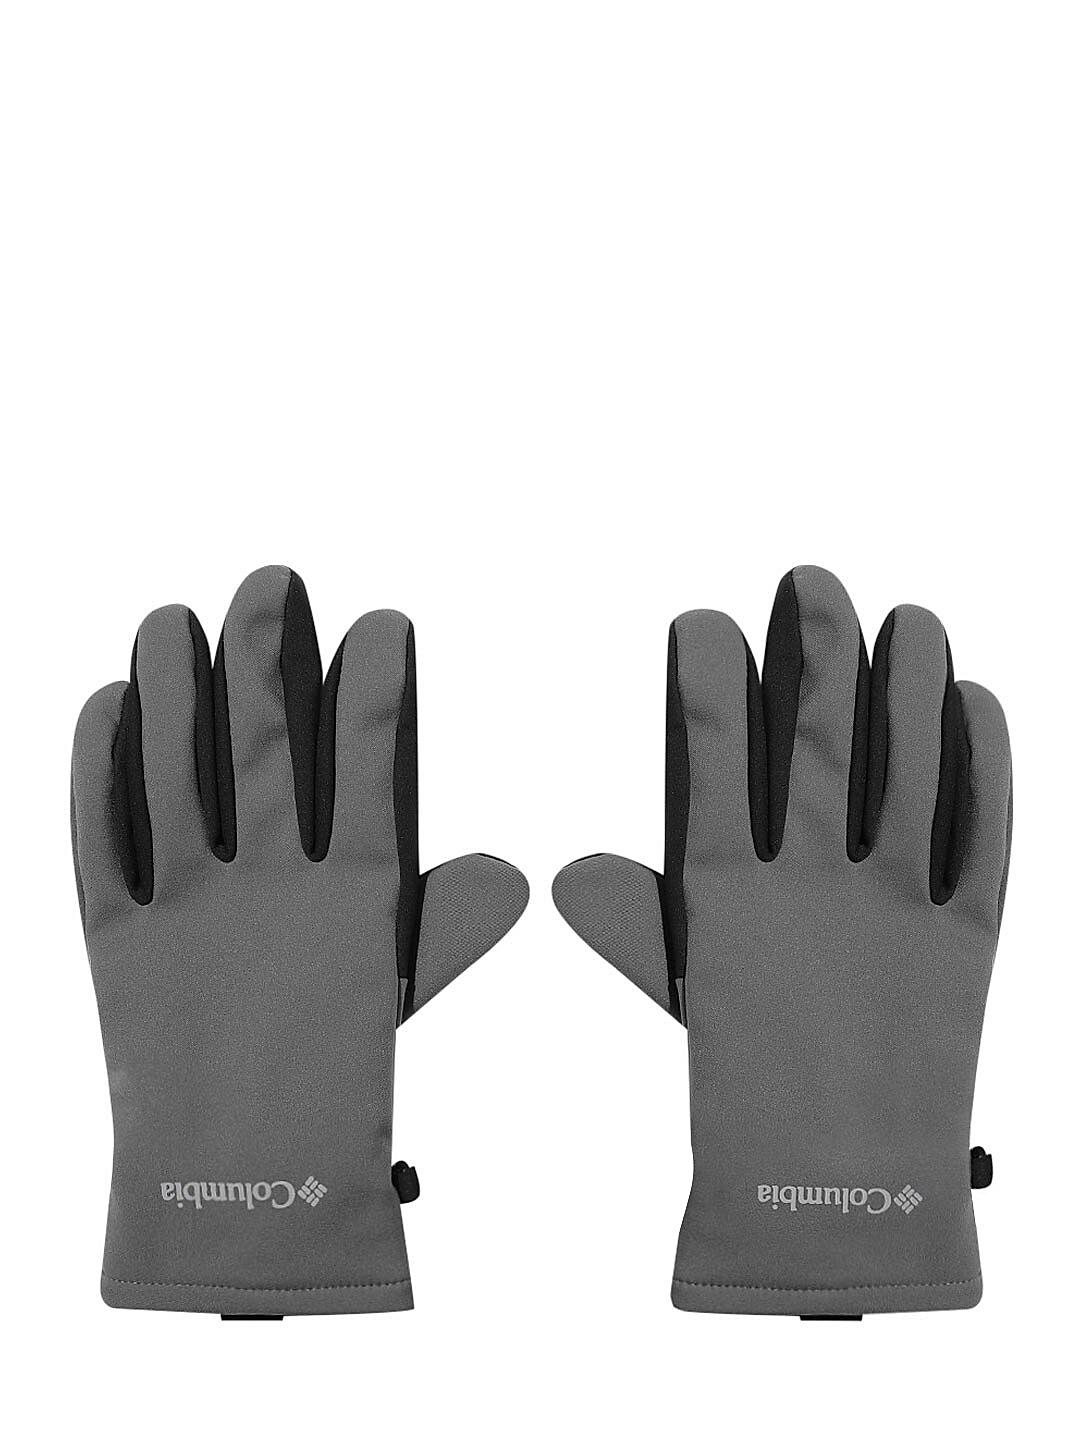 Gear Check: Heat 2 Softshell Photography Glove